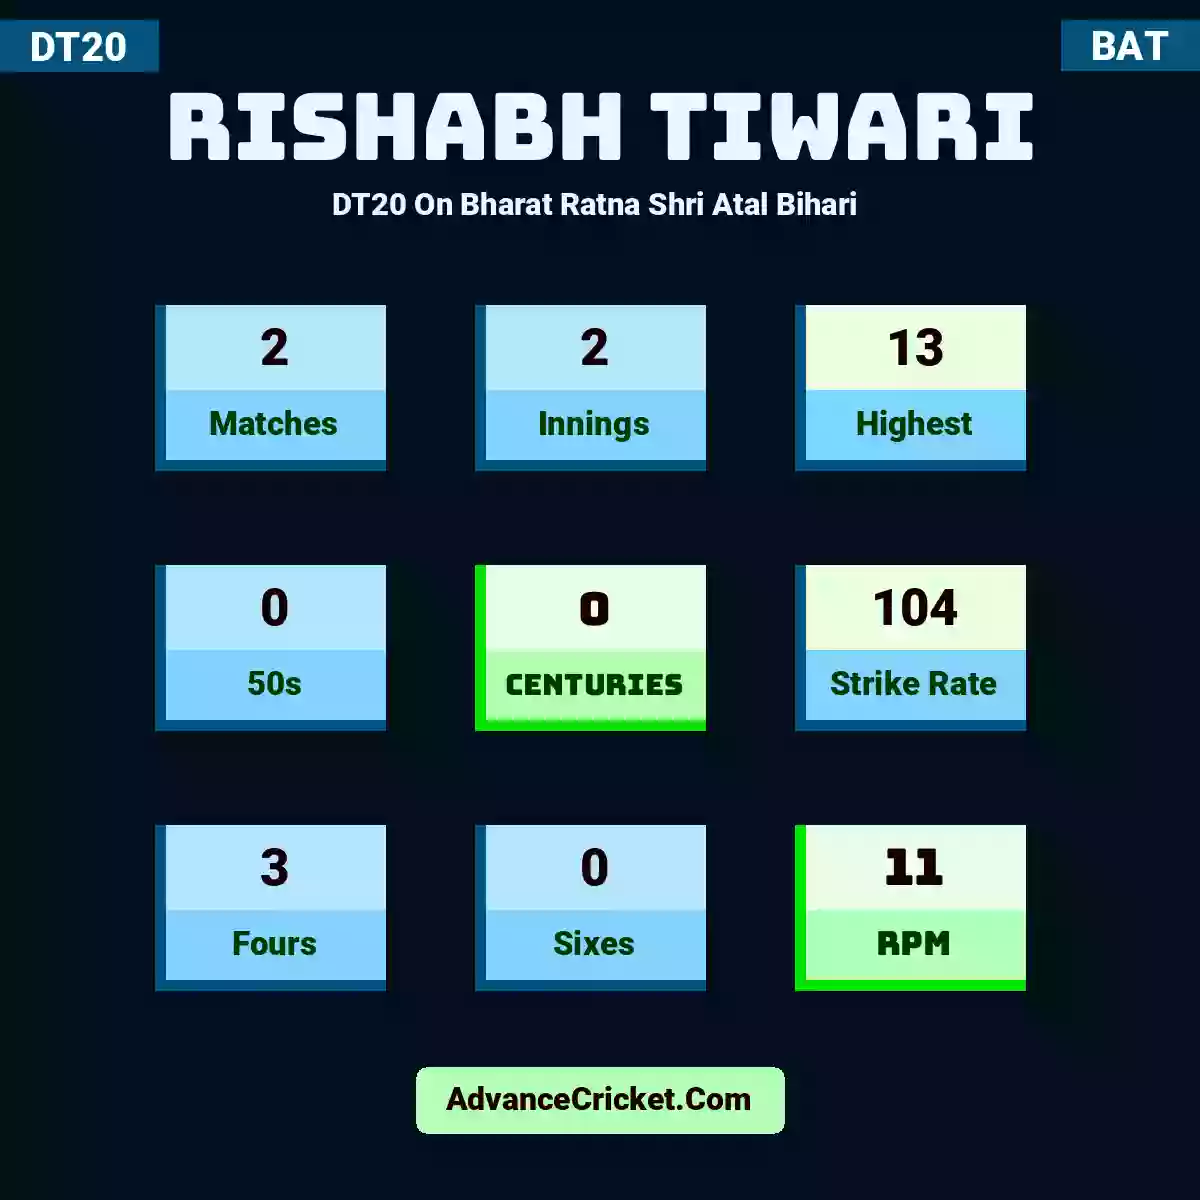 Rishabh Tiwari DT20  On Bharat Ratna Shri Atal Bihari , Rishabh Tiwari played 2 matches, scored 13 runs as highest, 0 half-centuries, and 0 centuries, with a strike rate of 104. R.Tiwari hit 3 fours and 0 sixes, with an RPM of 11.